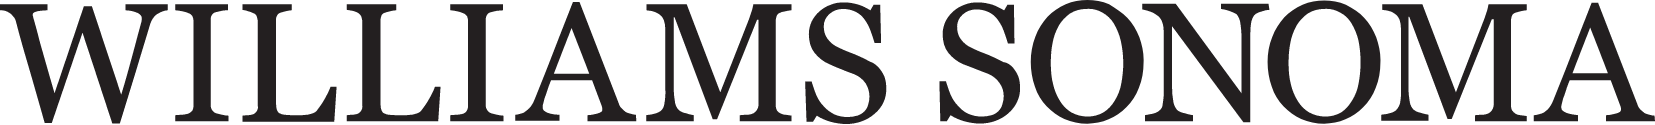 Williams-Sonoma logo large (transparent PNG)